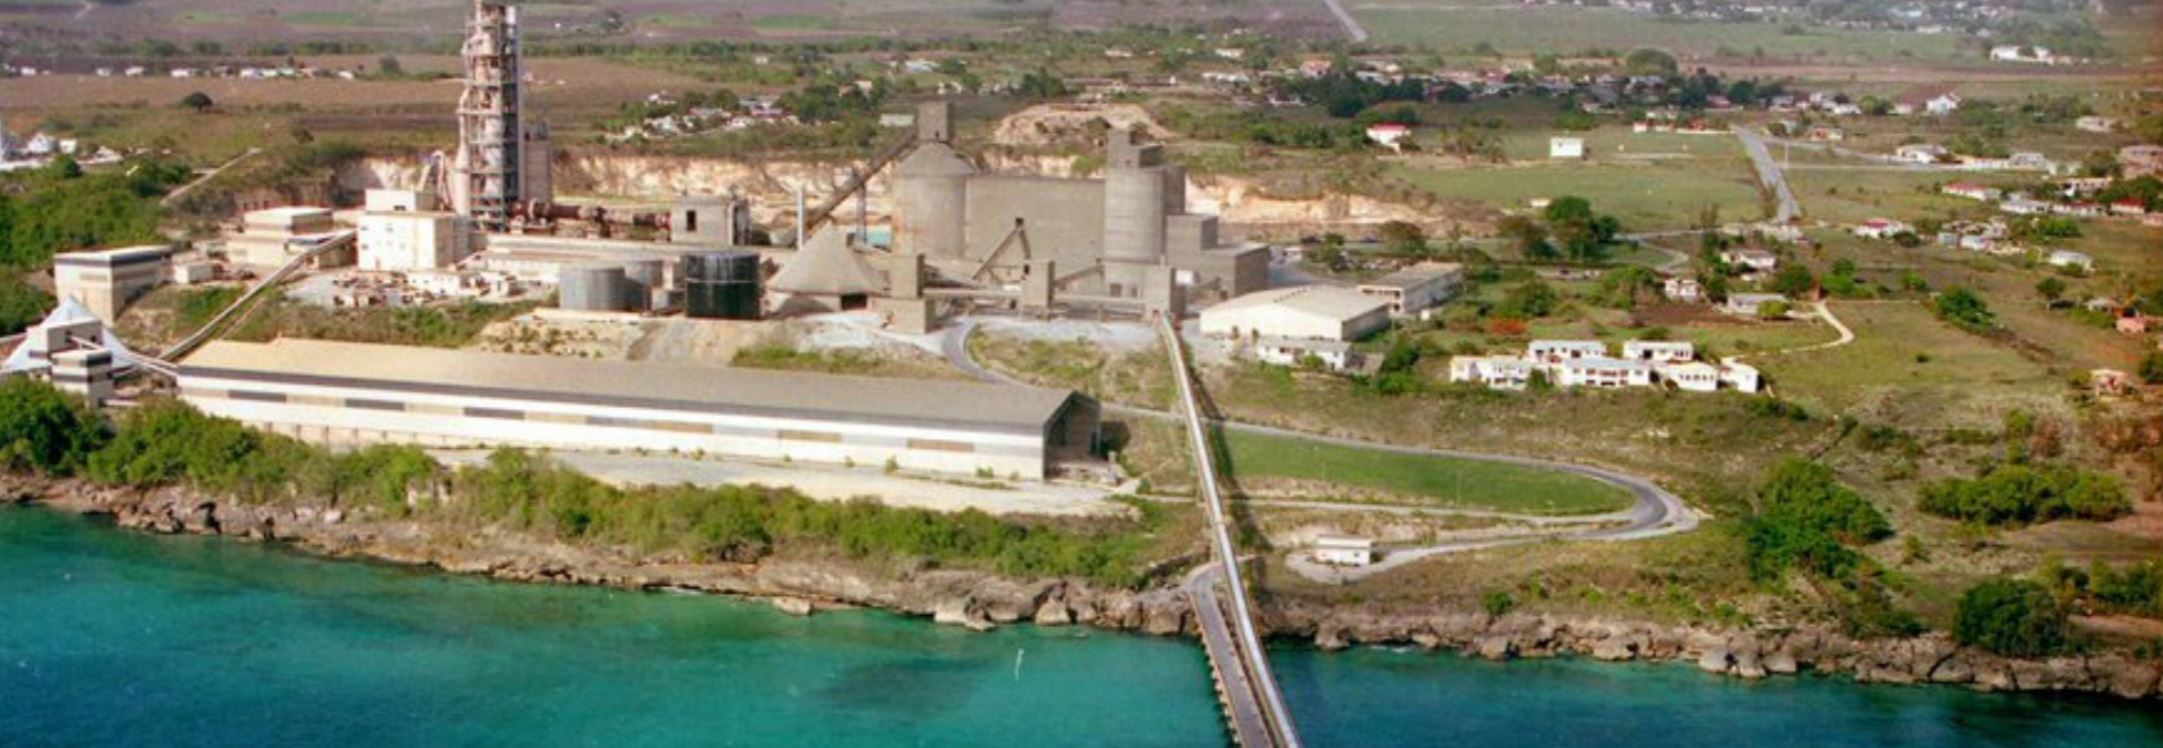 Arawak Cement Company, Ltd. - Barbados | Business View Caribbean